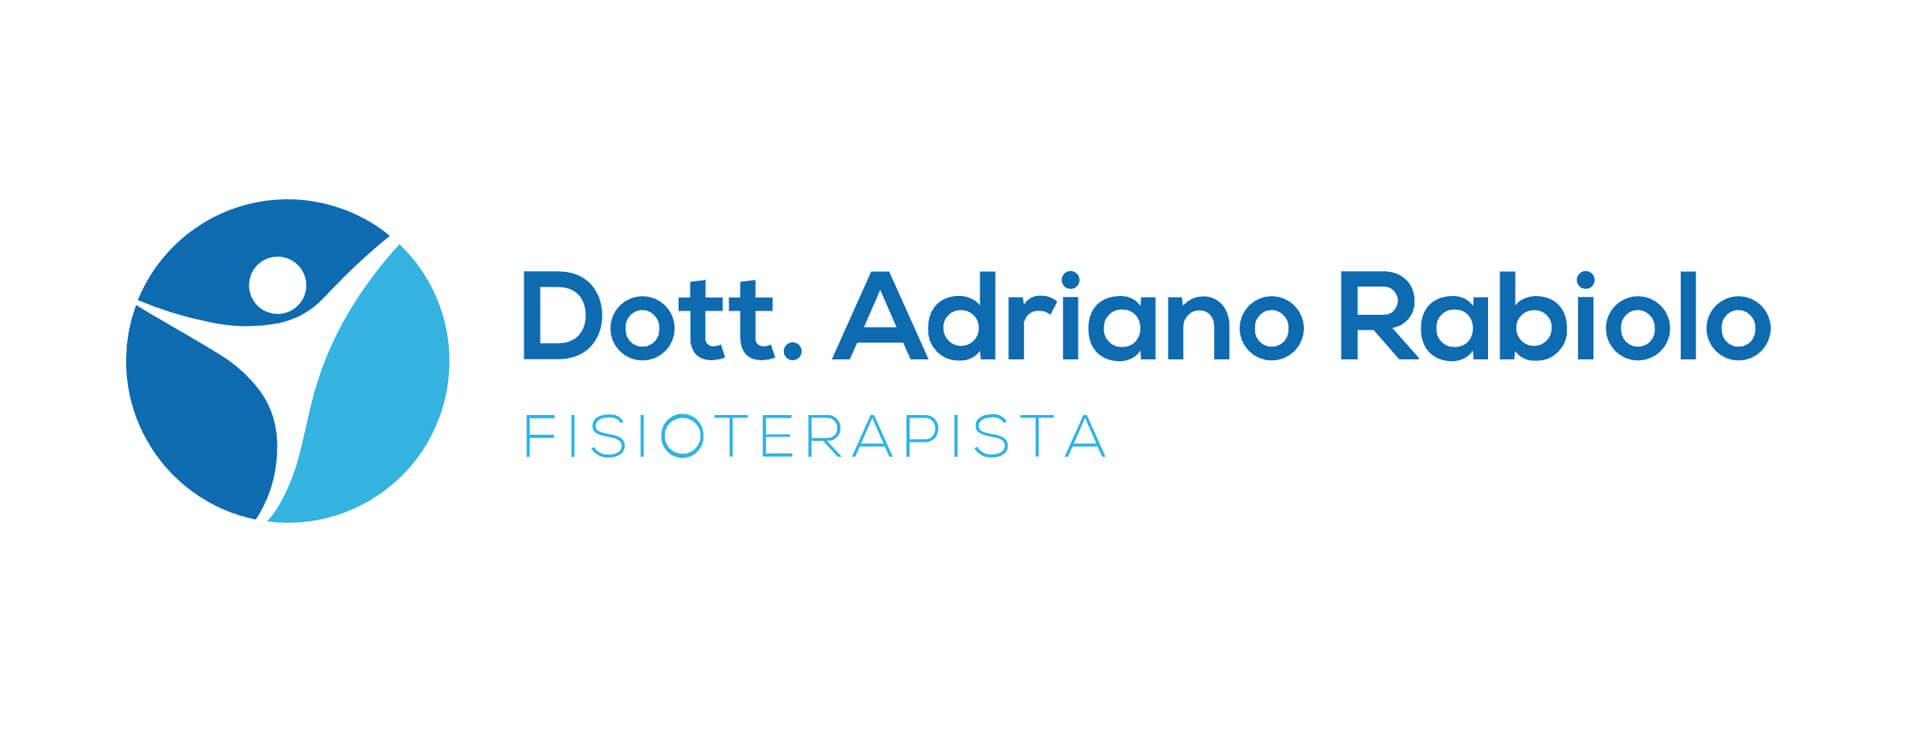 Dott. Adriano Rabiolo Fisioterapista Logo